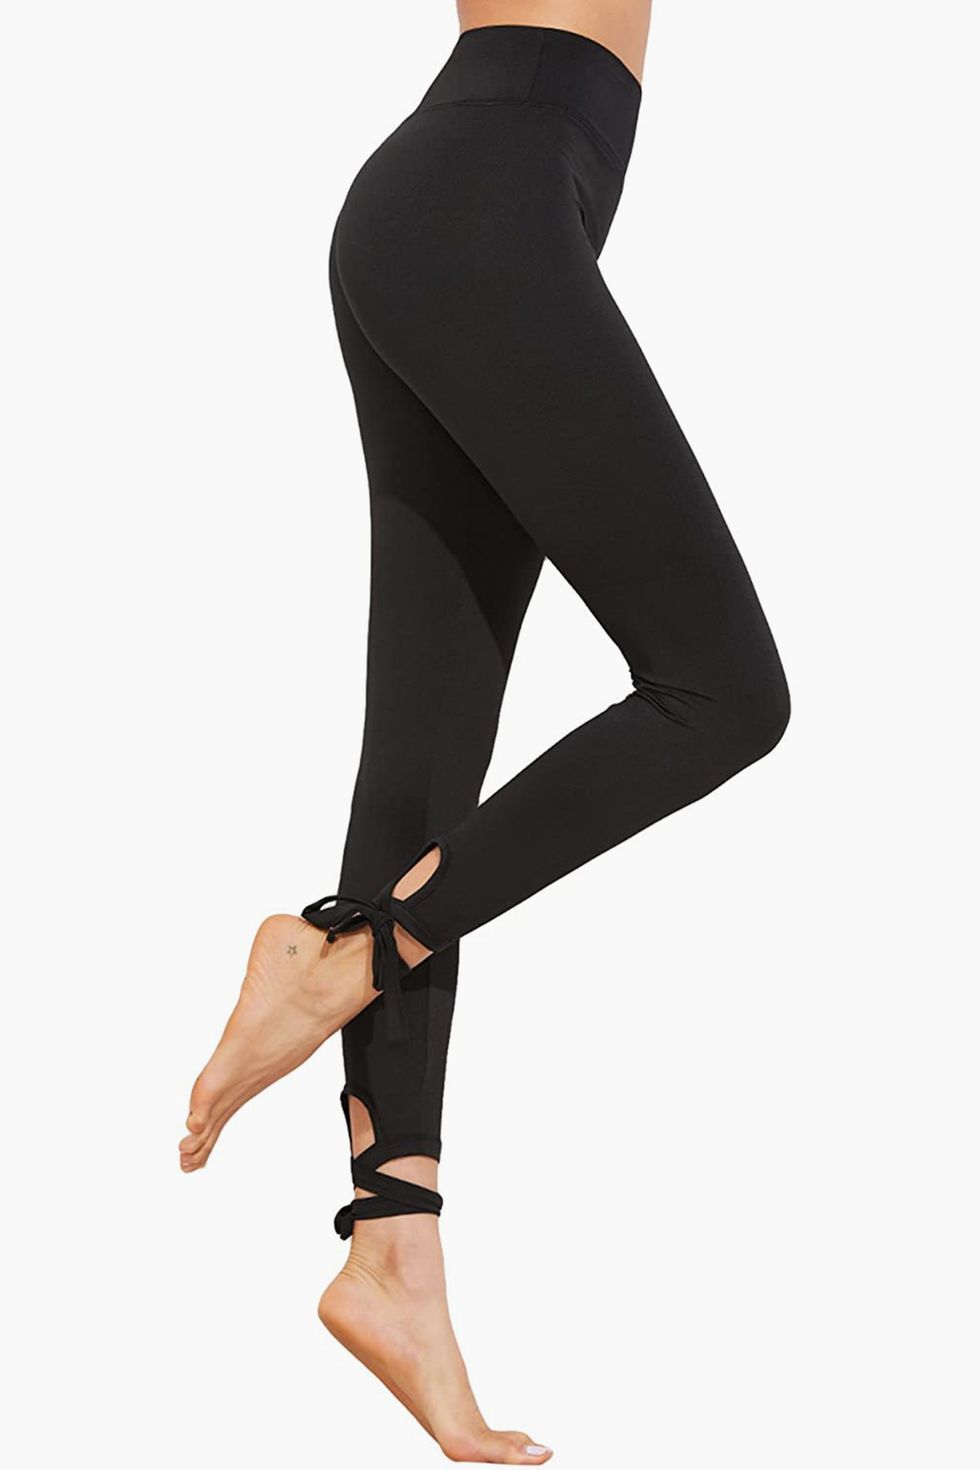 SweatyRocks Leggings Women Yoga Workout Pants High Waist Cutout Tights ,  Black , X-Small : Clothing, Shoes & Jewelry 